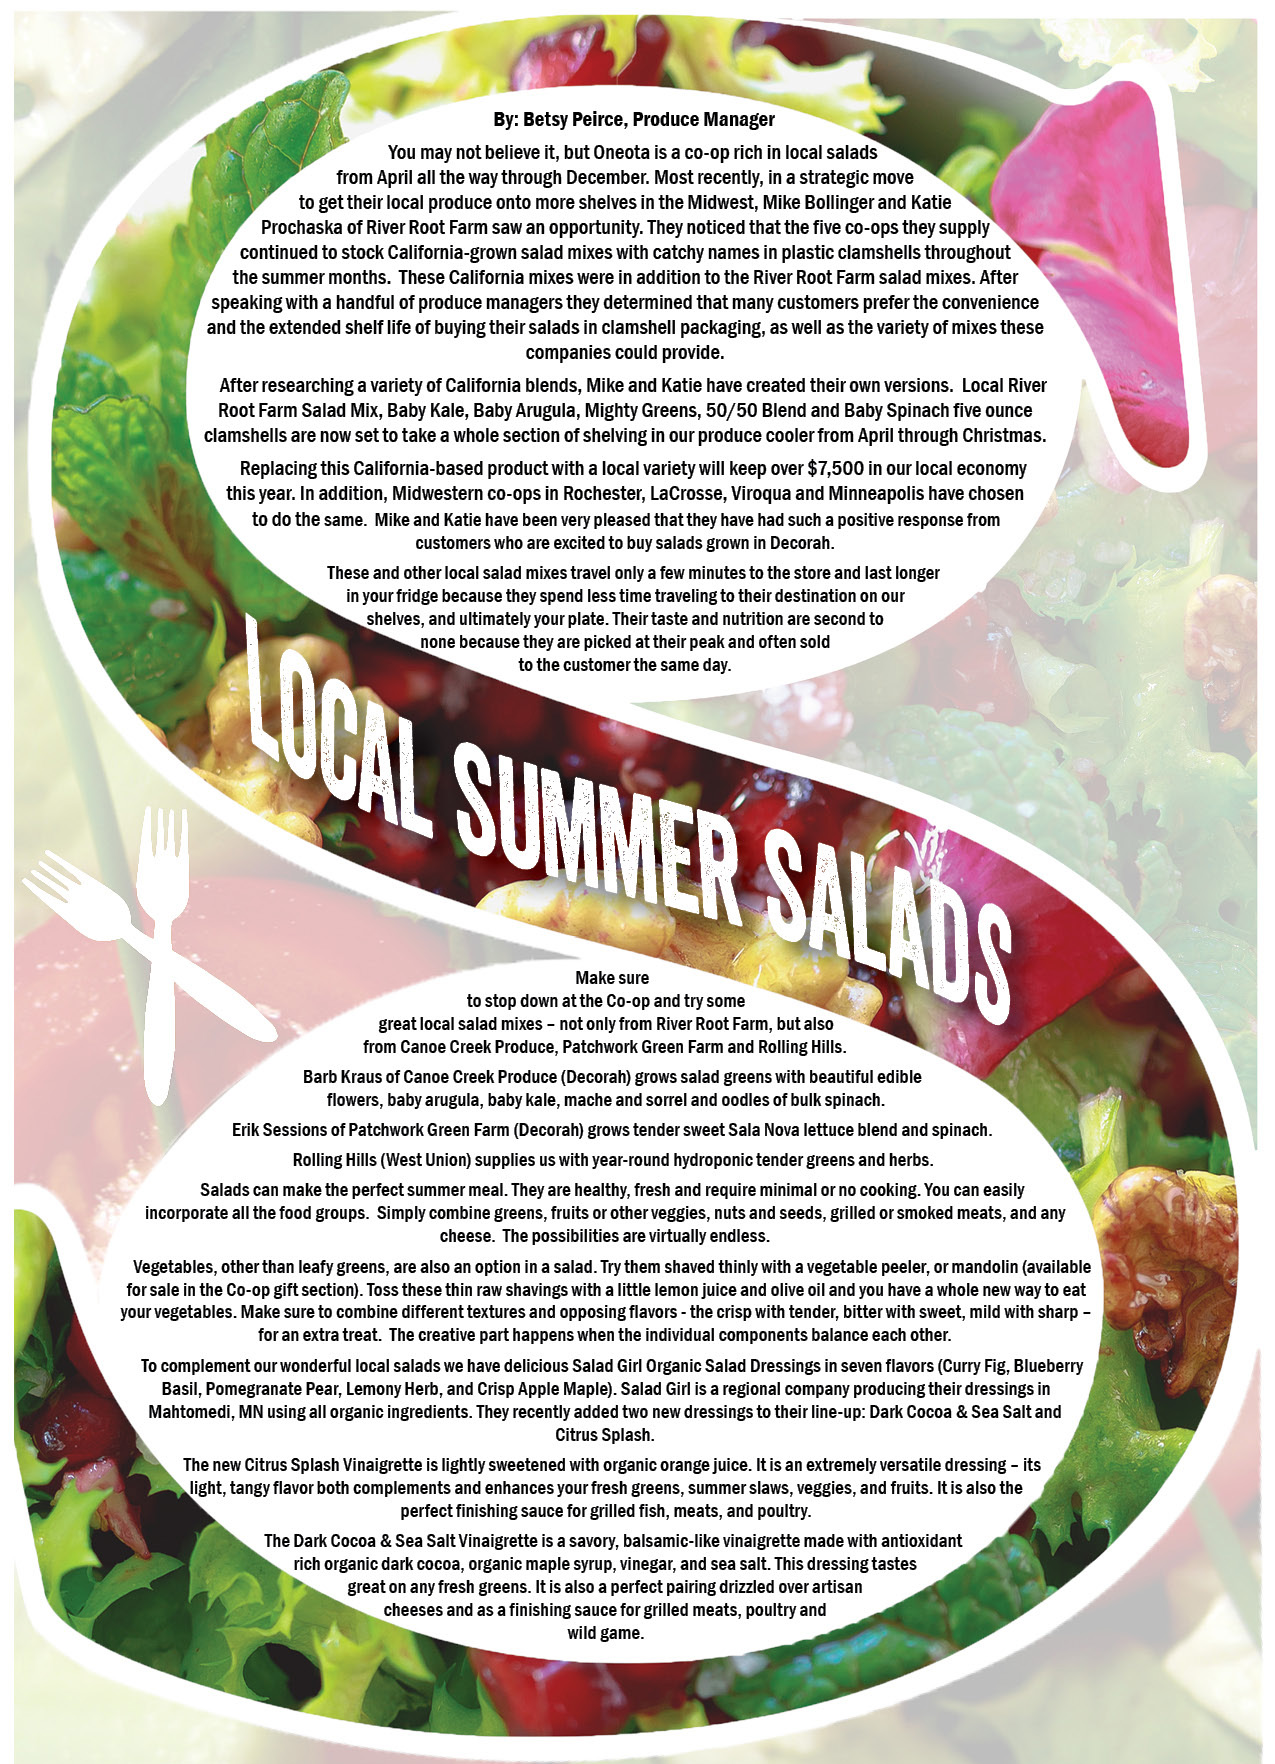 Local Summer Salads_Graphic_Web